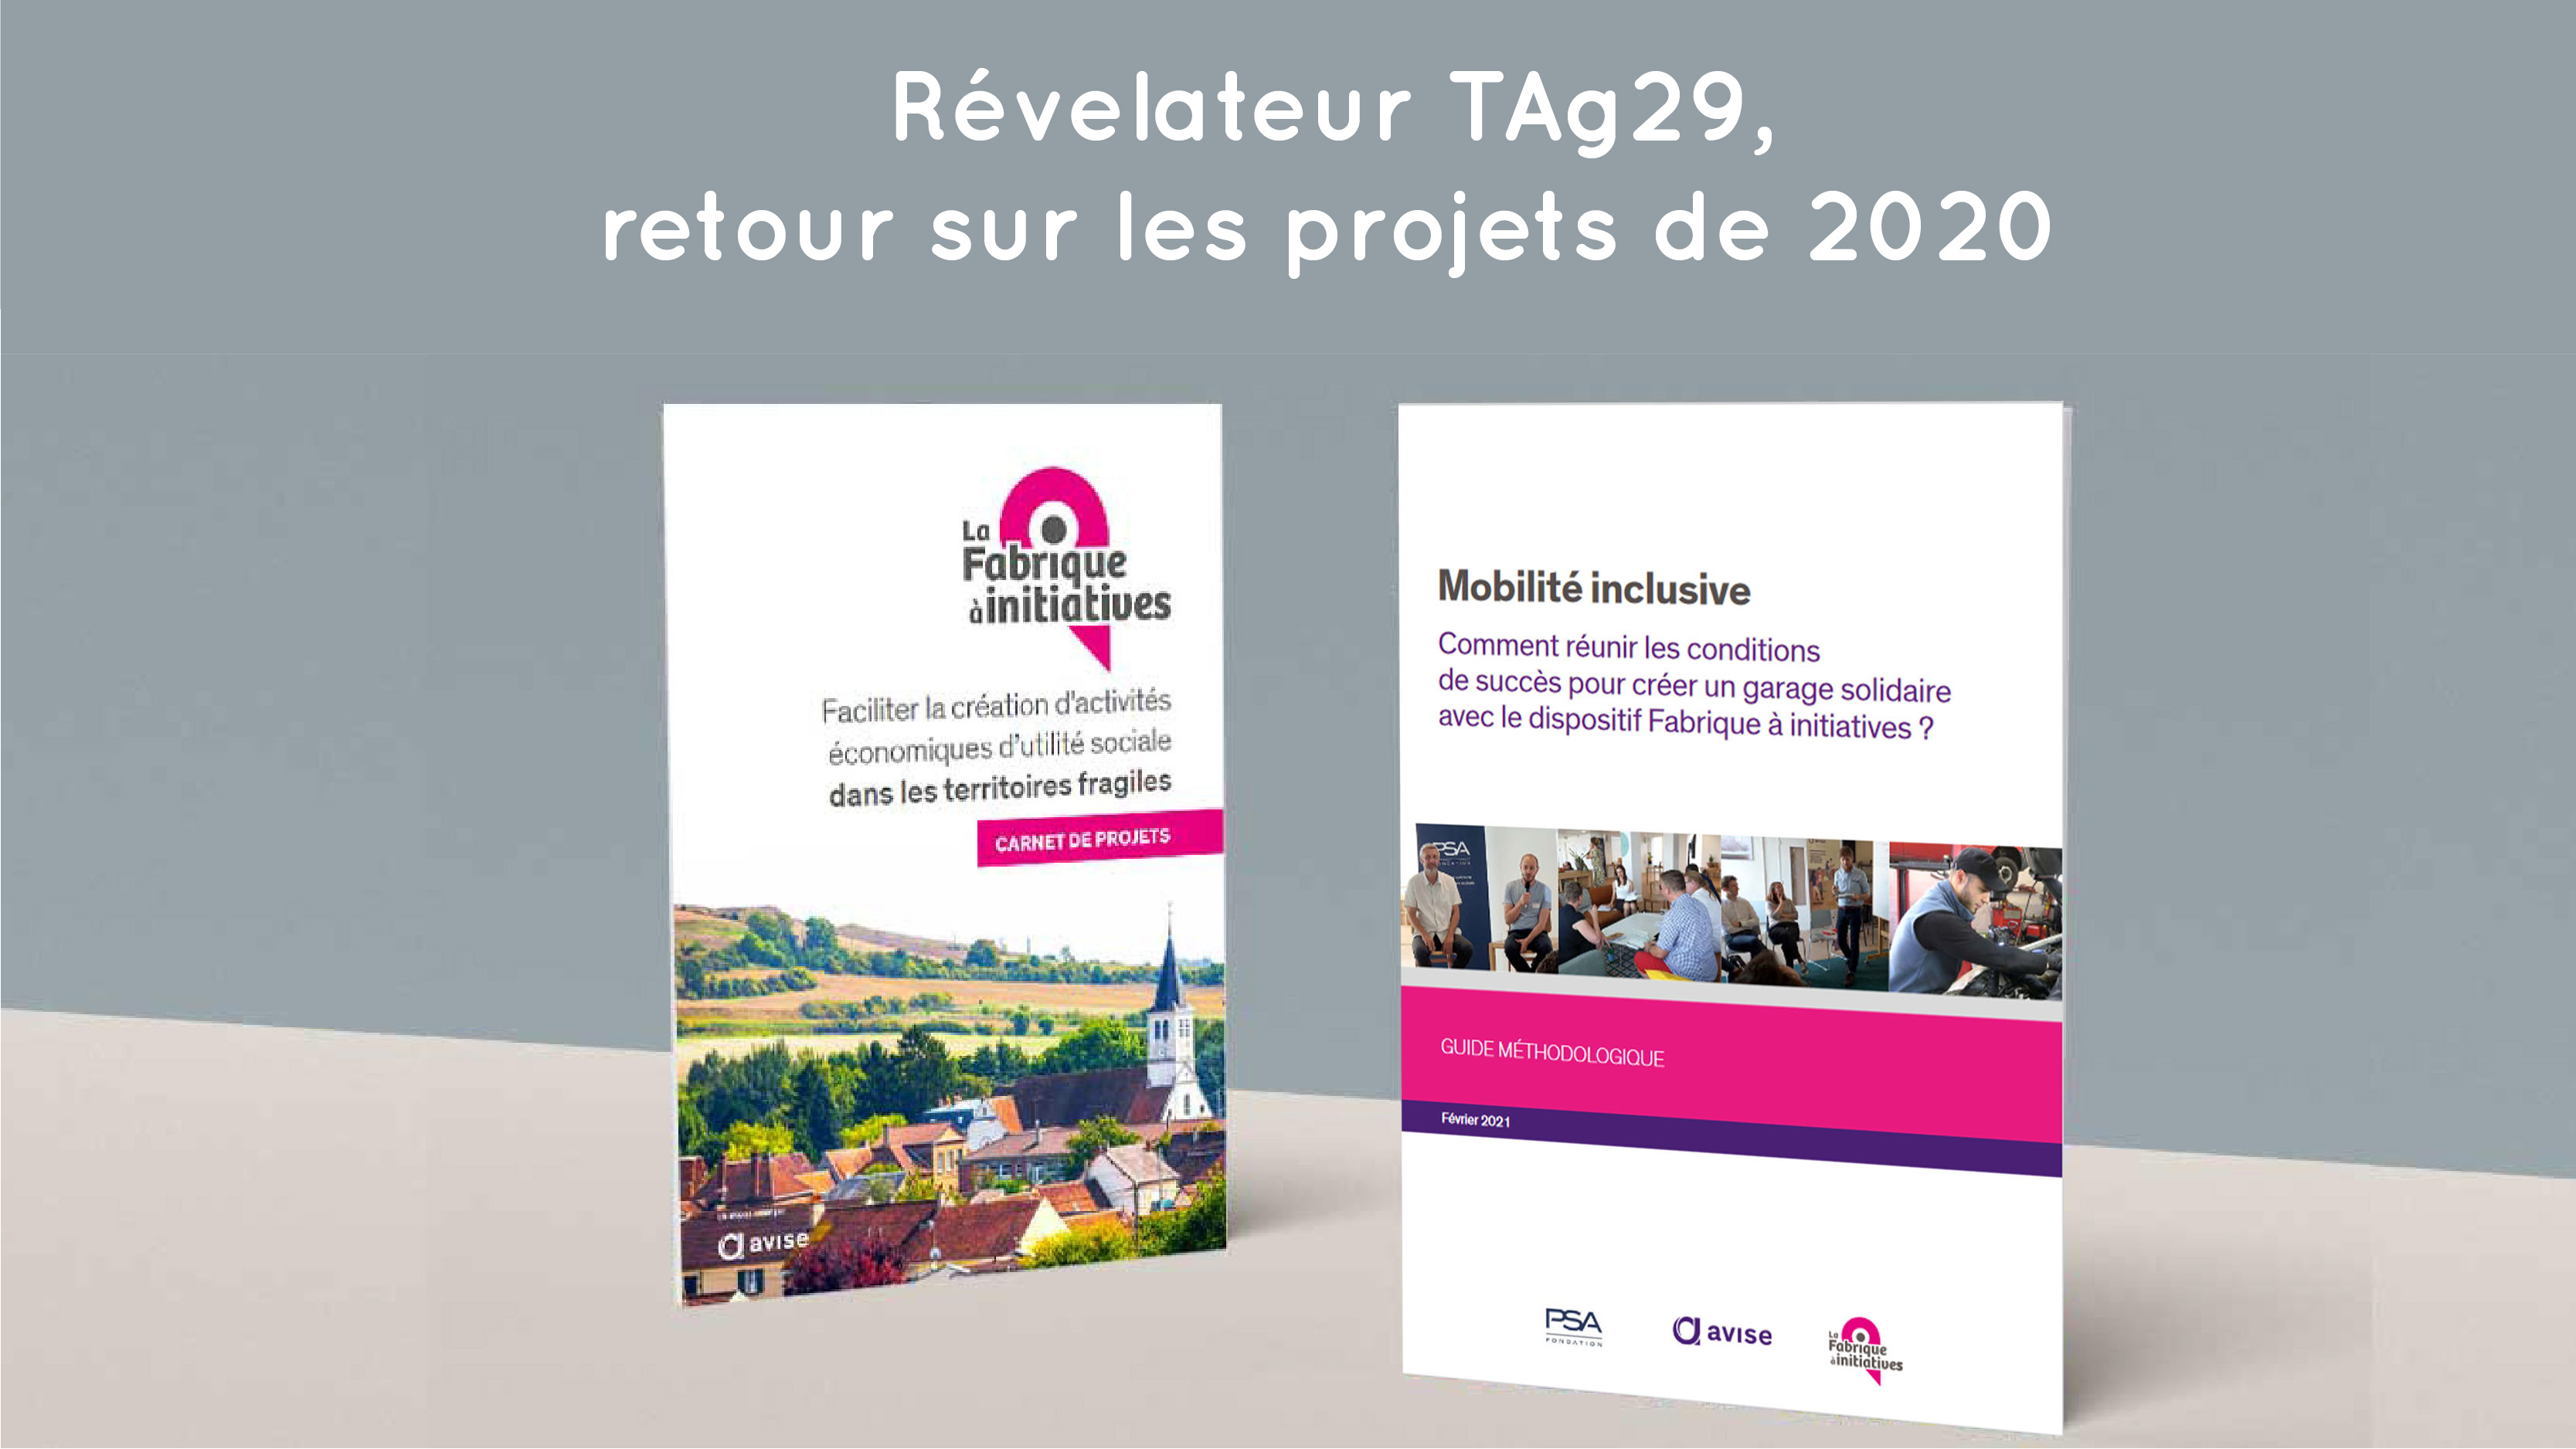 TAg29, projets Revelateur 2020